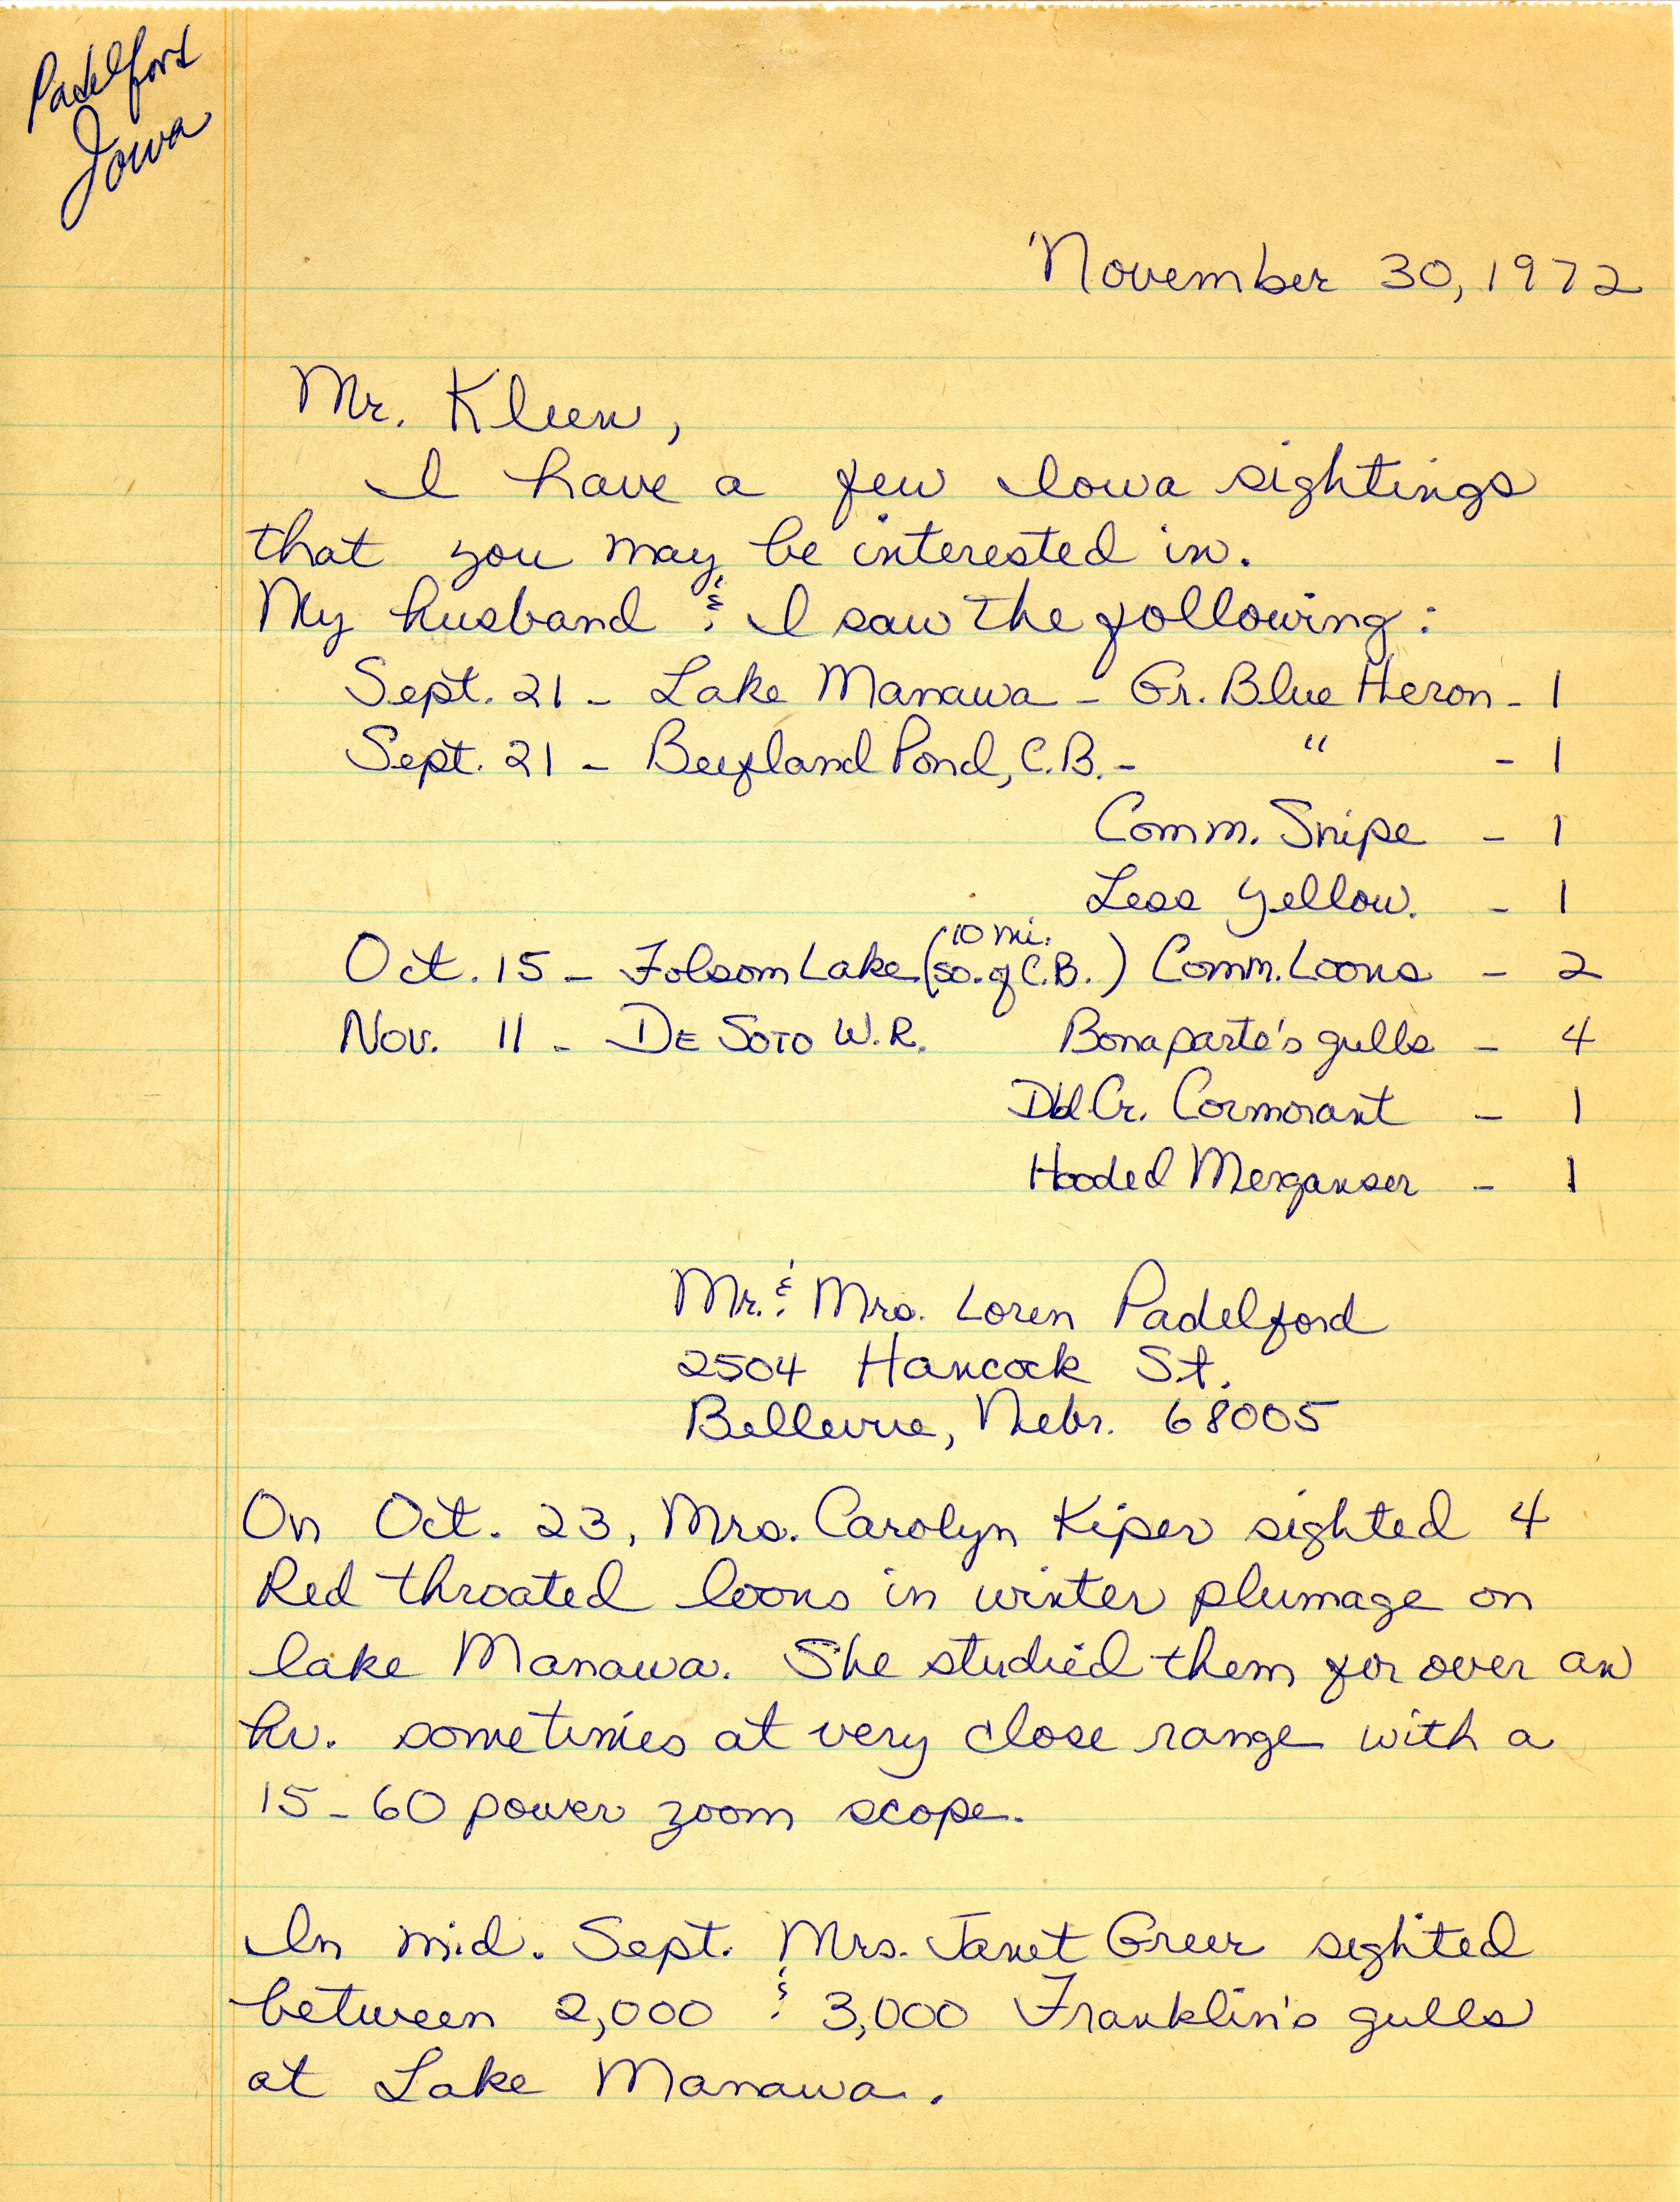 Babs Padelford letter to Vernon M. Kleen regarding fall bird sightings, November 30, 1972